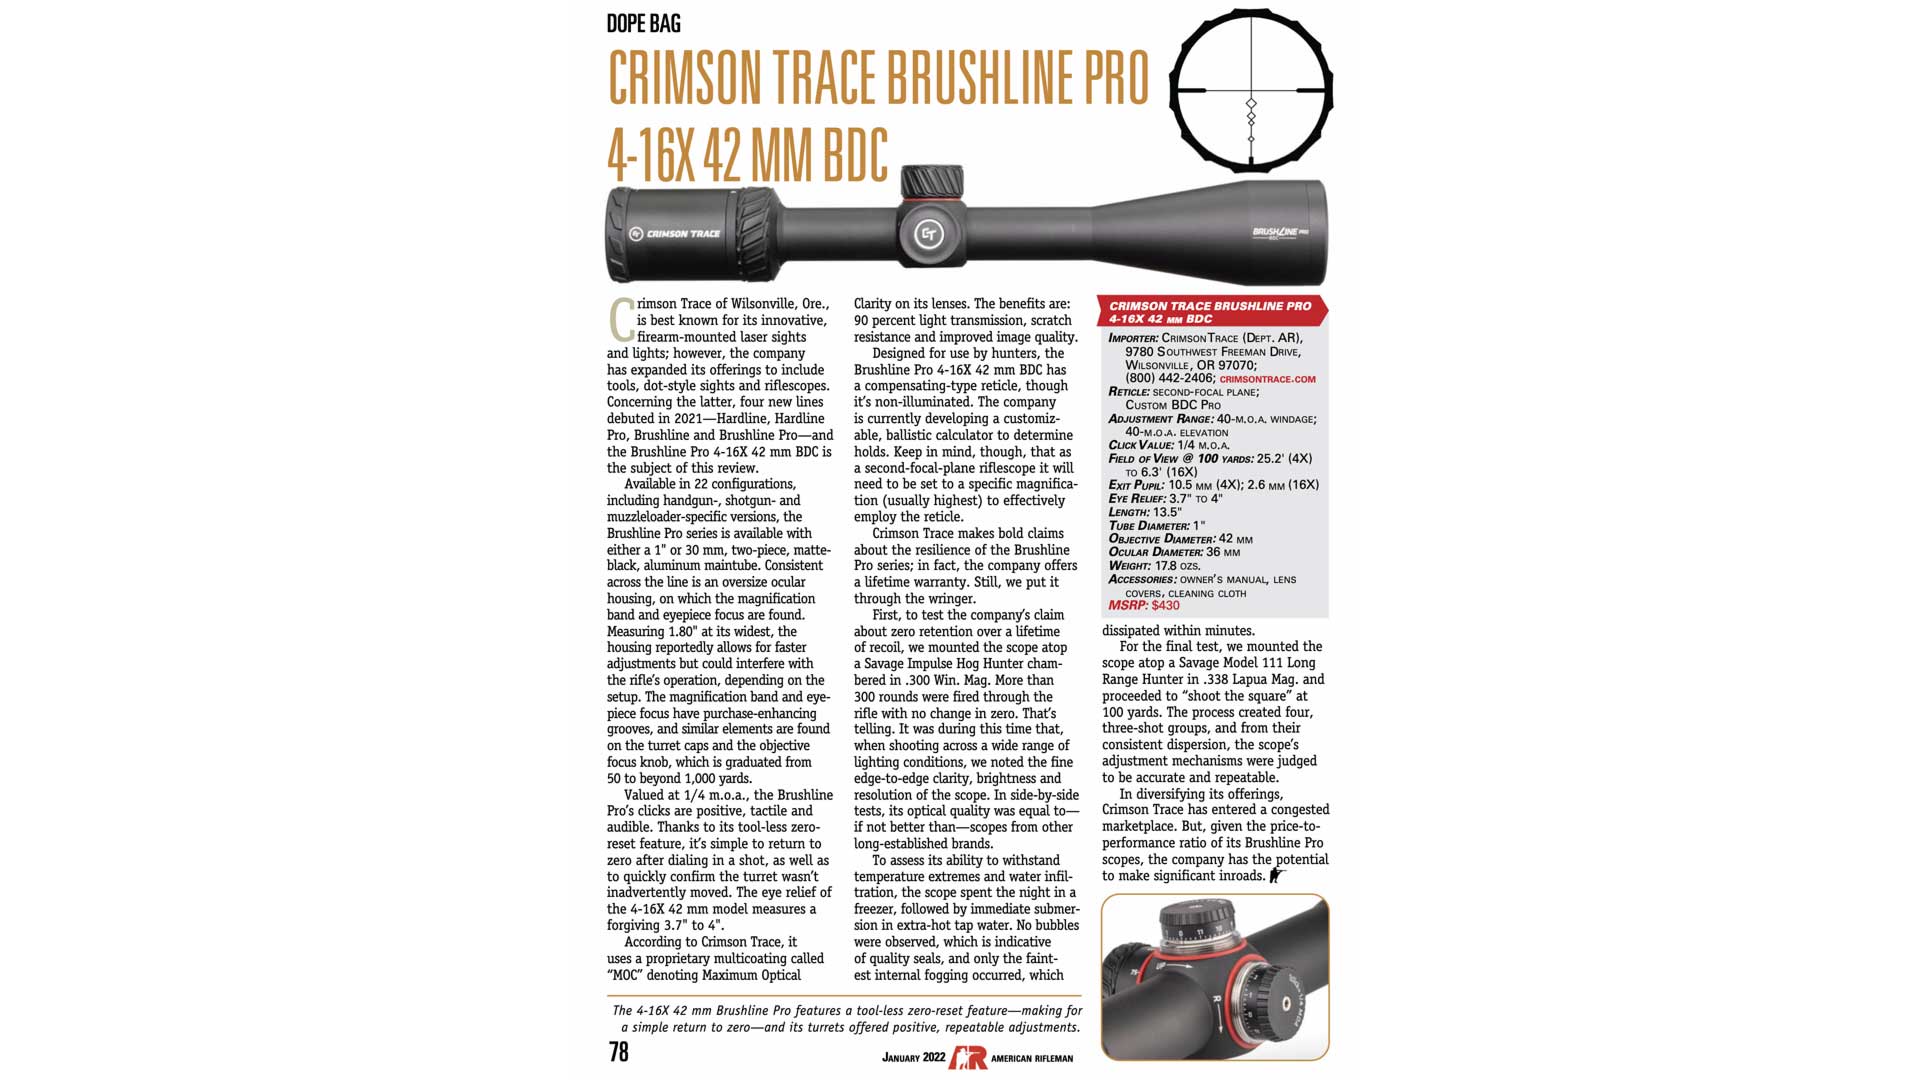 Crimson Trace Brushline Pro 4-16x 42 mm BDC riflescope optic review magazine article illustration text